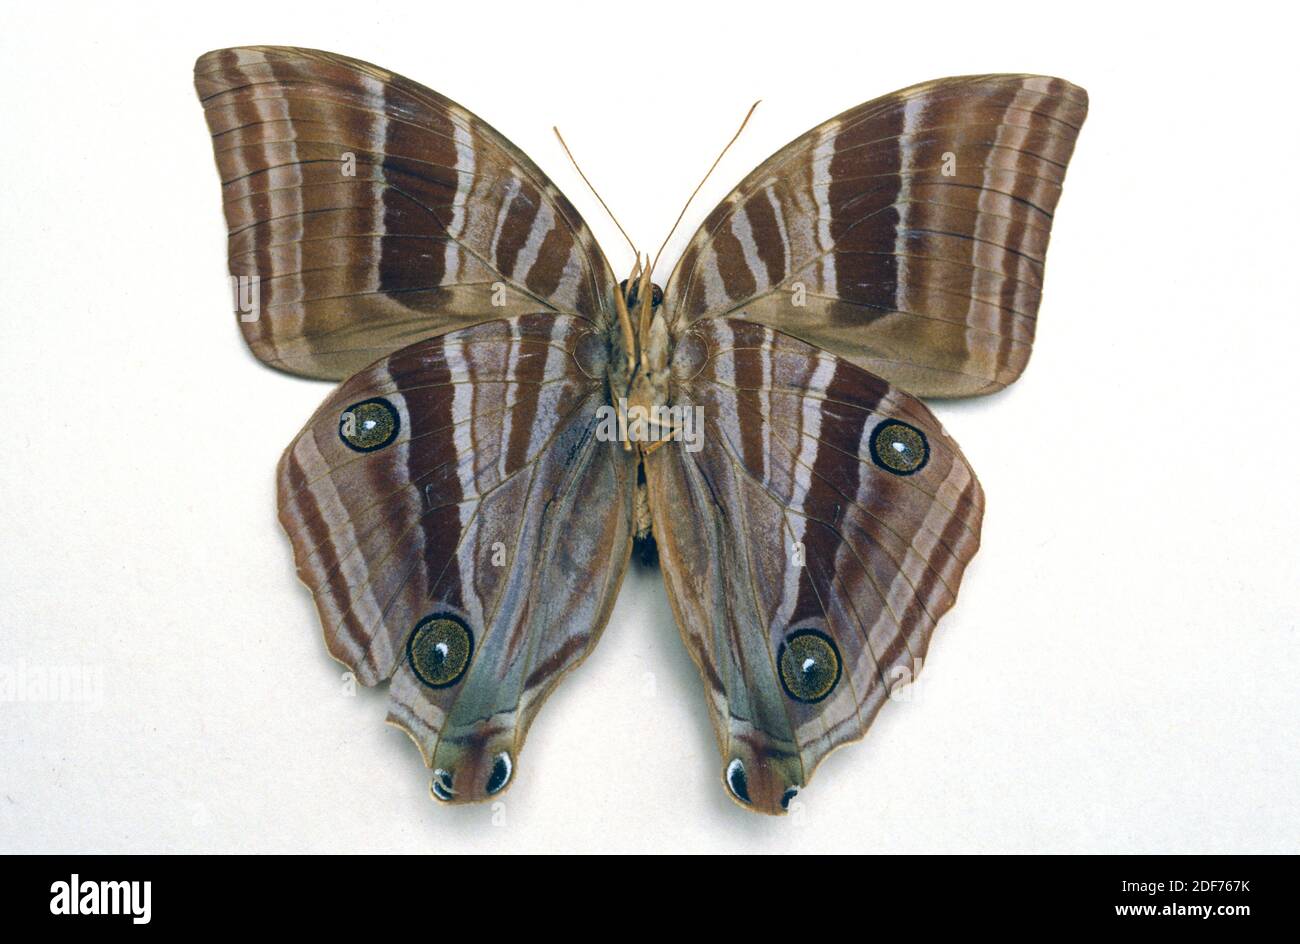 Amathusia perakana ist ein Schmetterling aus Indonesien und Malaysia. Ventrale Oberfläche. Stockfoto